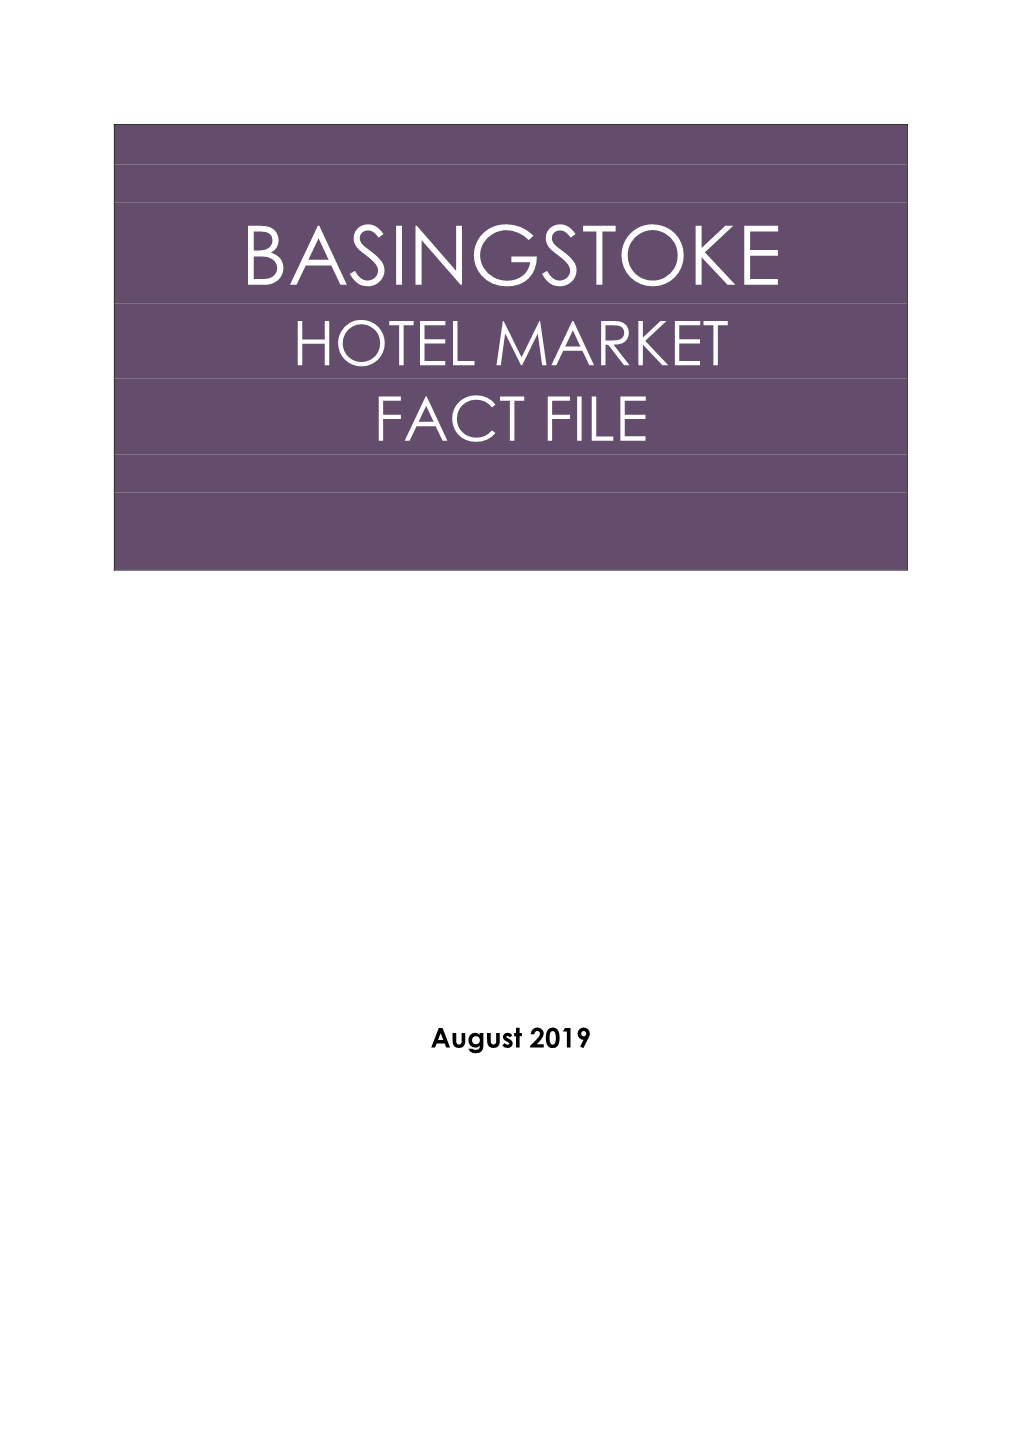 Basingstoke Hotel Market Fact File